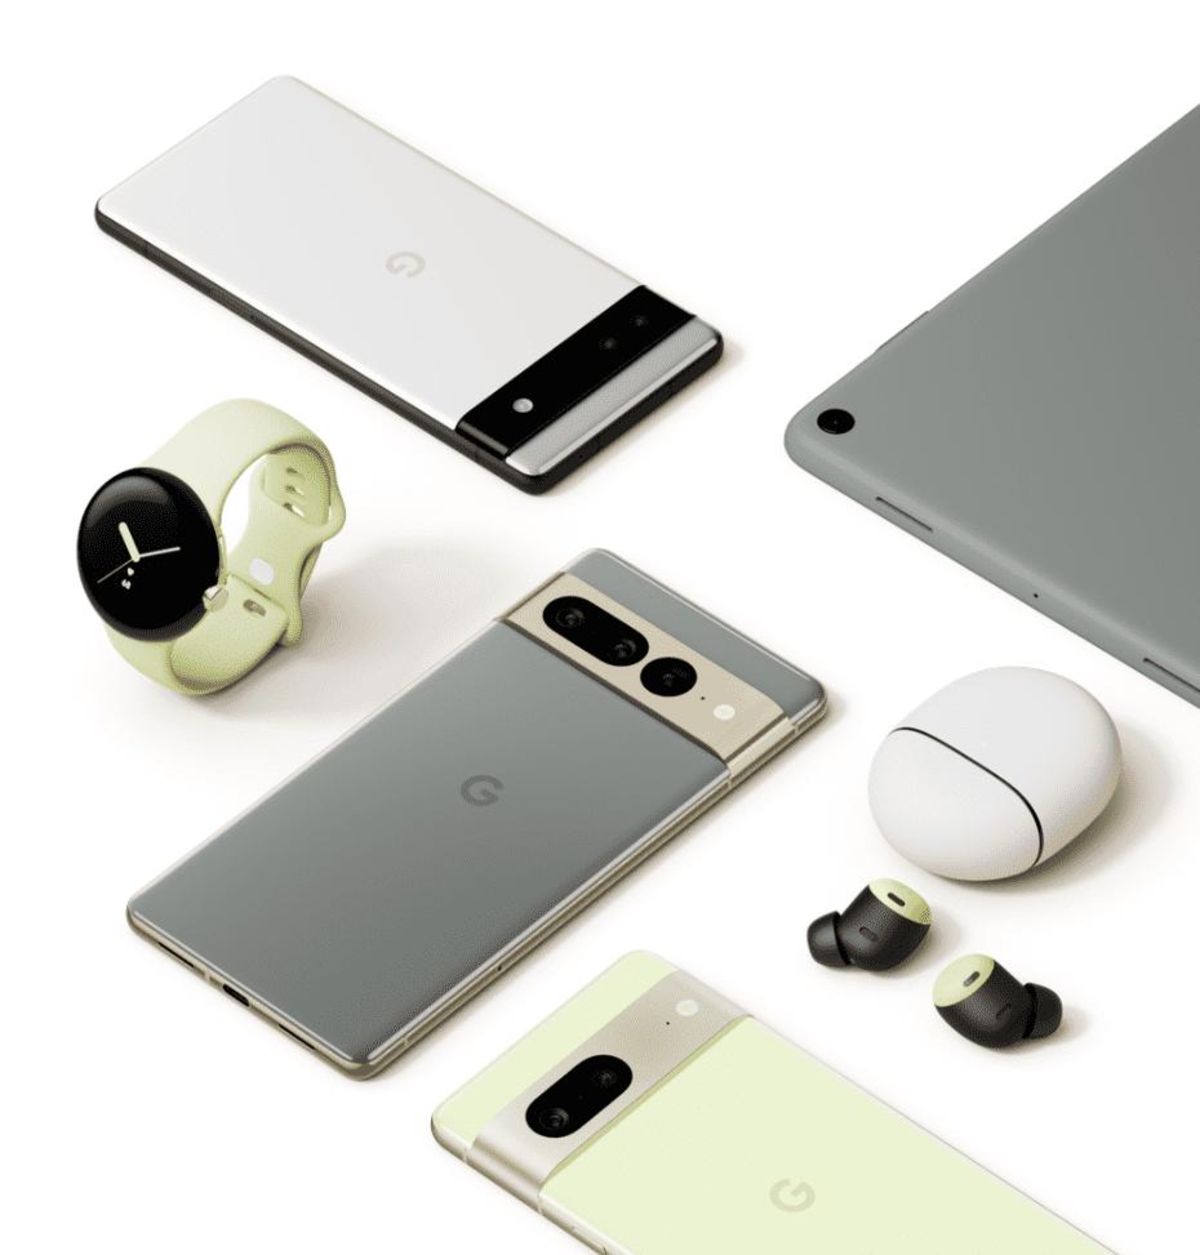 Phone, tablet, headphones and Google watch